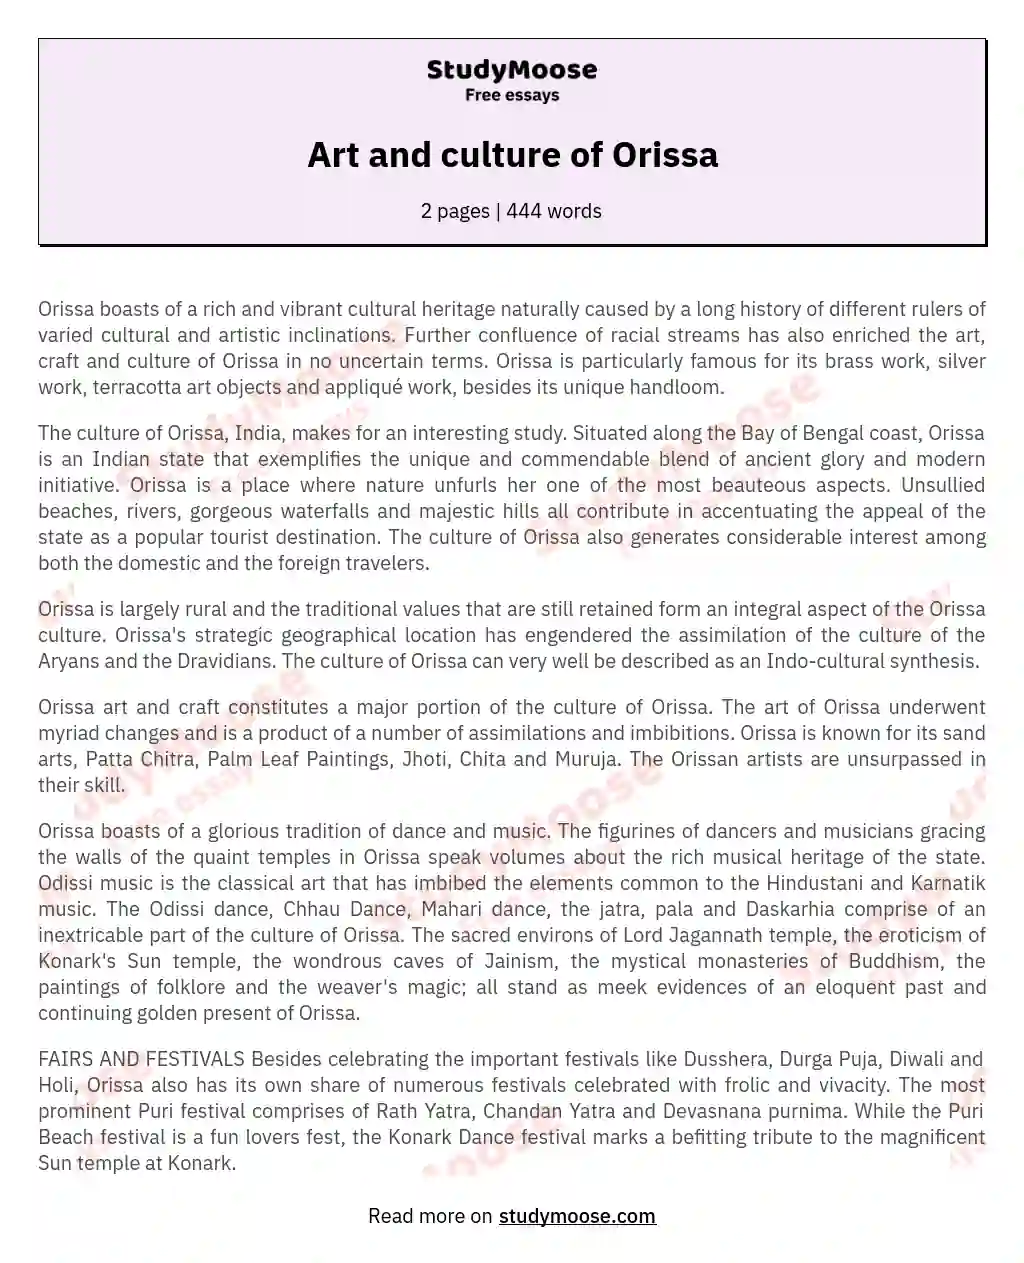 Art and culture of Orissa essay